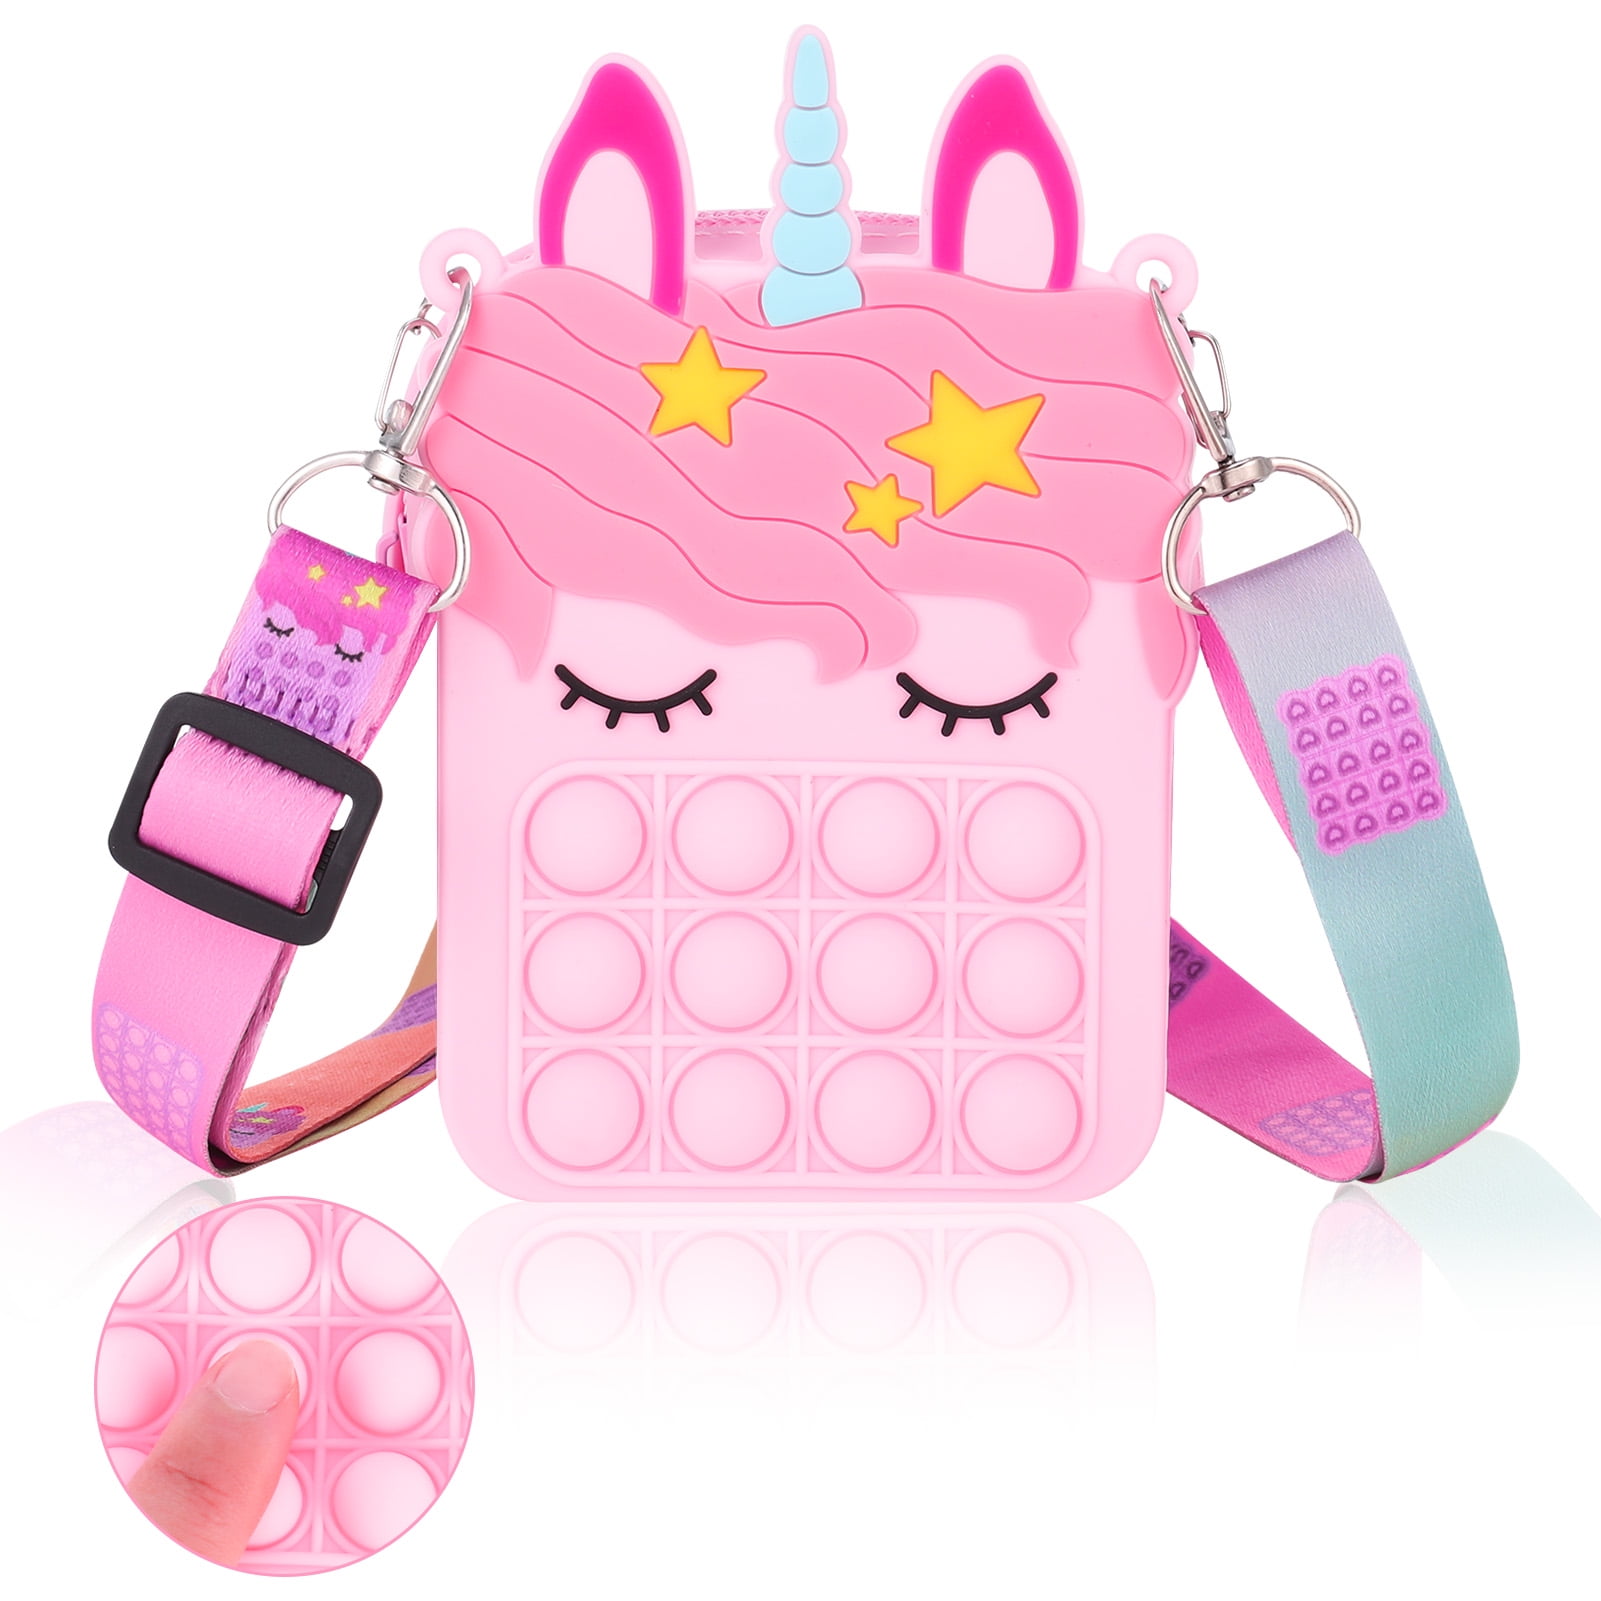 HEQUSIGNS Unicorn Pop Purse Girls Push Bubble Sensory Shoulder Bag Fidget Toy ADHD Silicone Small Relieve Stress Relief Bag Pink bf566d49 3d70 4a08 ae5b 52d0bd15a099.0ce6ac162d0b91c1b894b88df65b802d